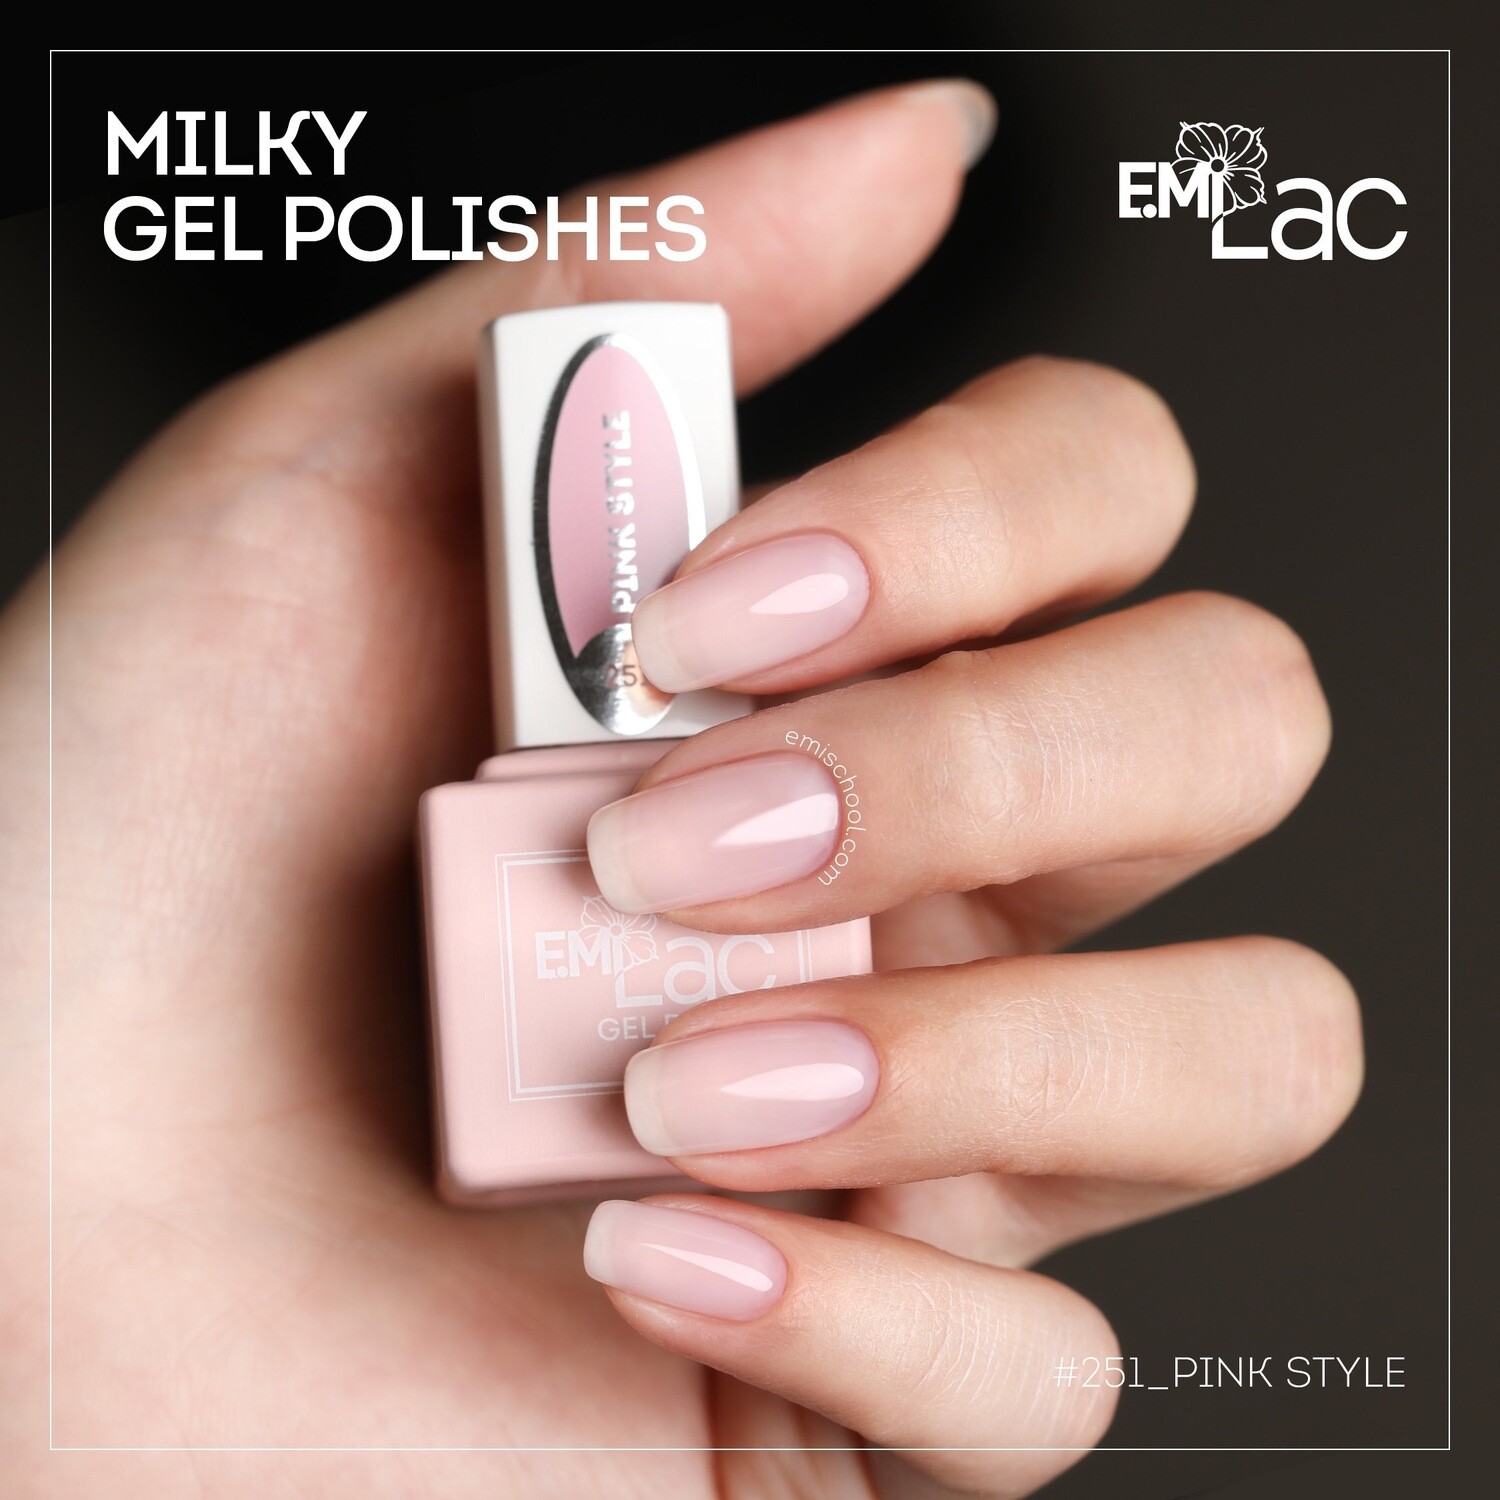 E.MiLac Pink Style #251, 9 ml.